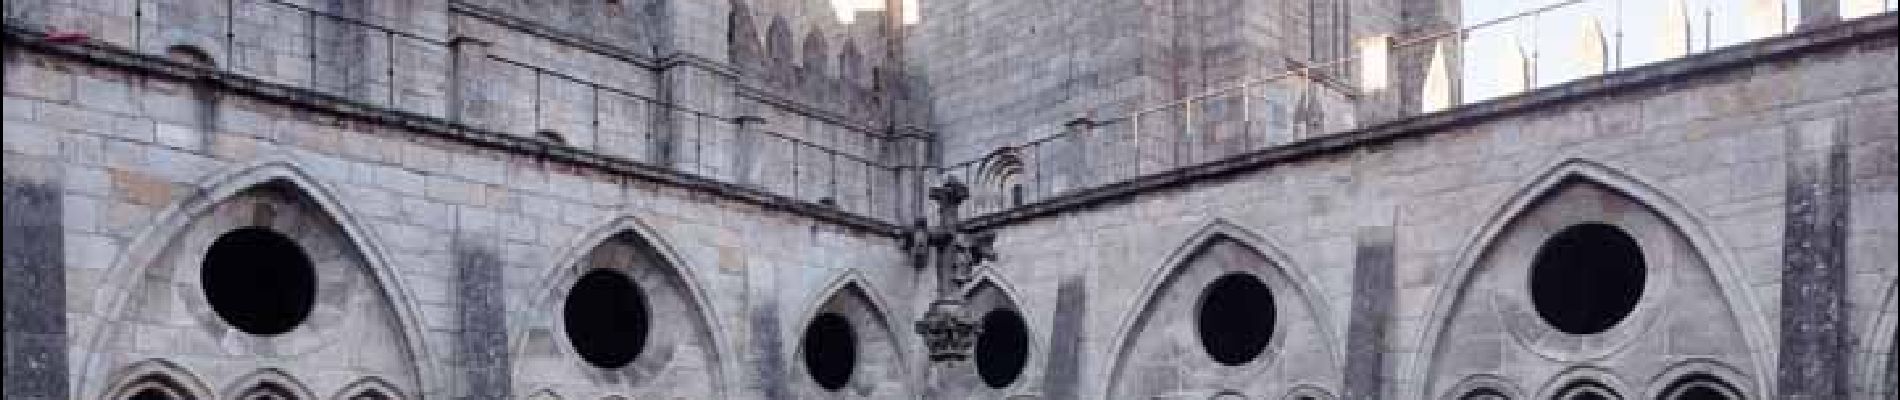 Point d'intérêt Cedofeita, Santo Ildefonso, Sé, Miragaia, São Nicolau e Vitória - Sé do Porto (cathedrale) - Photo